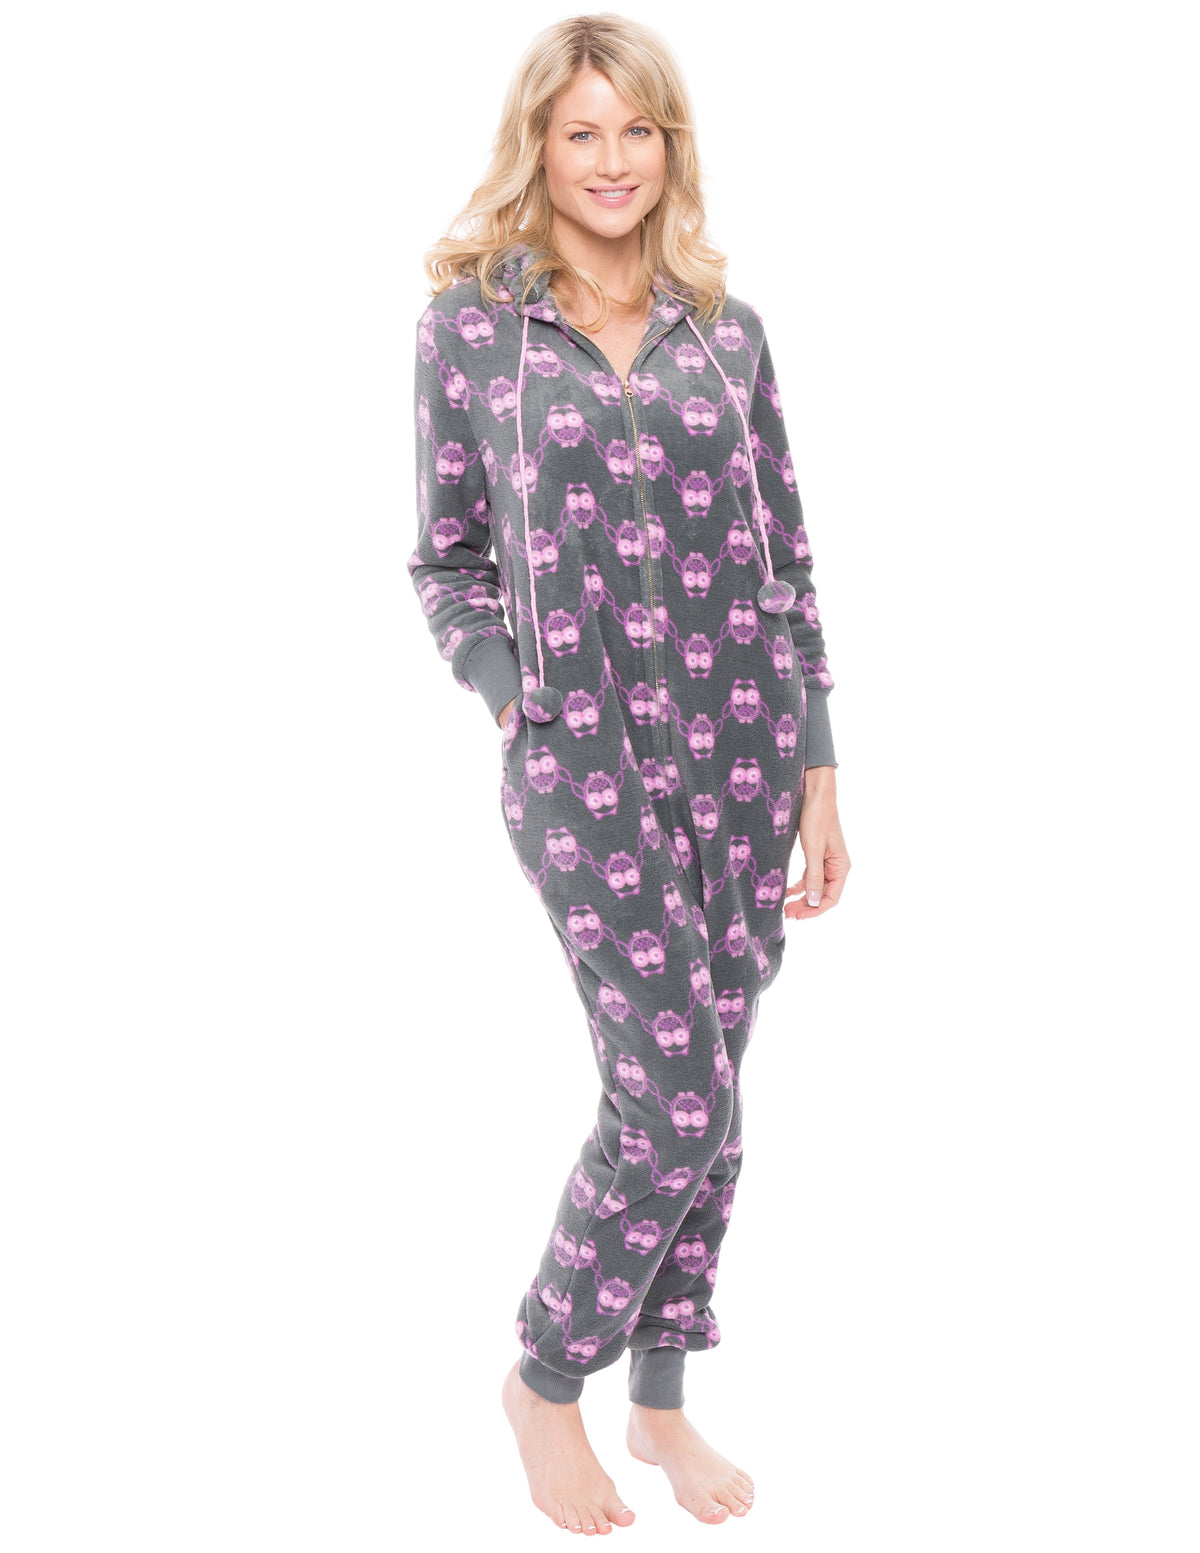 Women's Premium Coral Fleece Plush Hooded Onesie Pajama - Owls - Grey/Purple